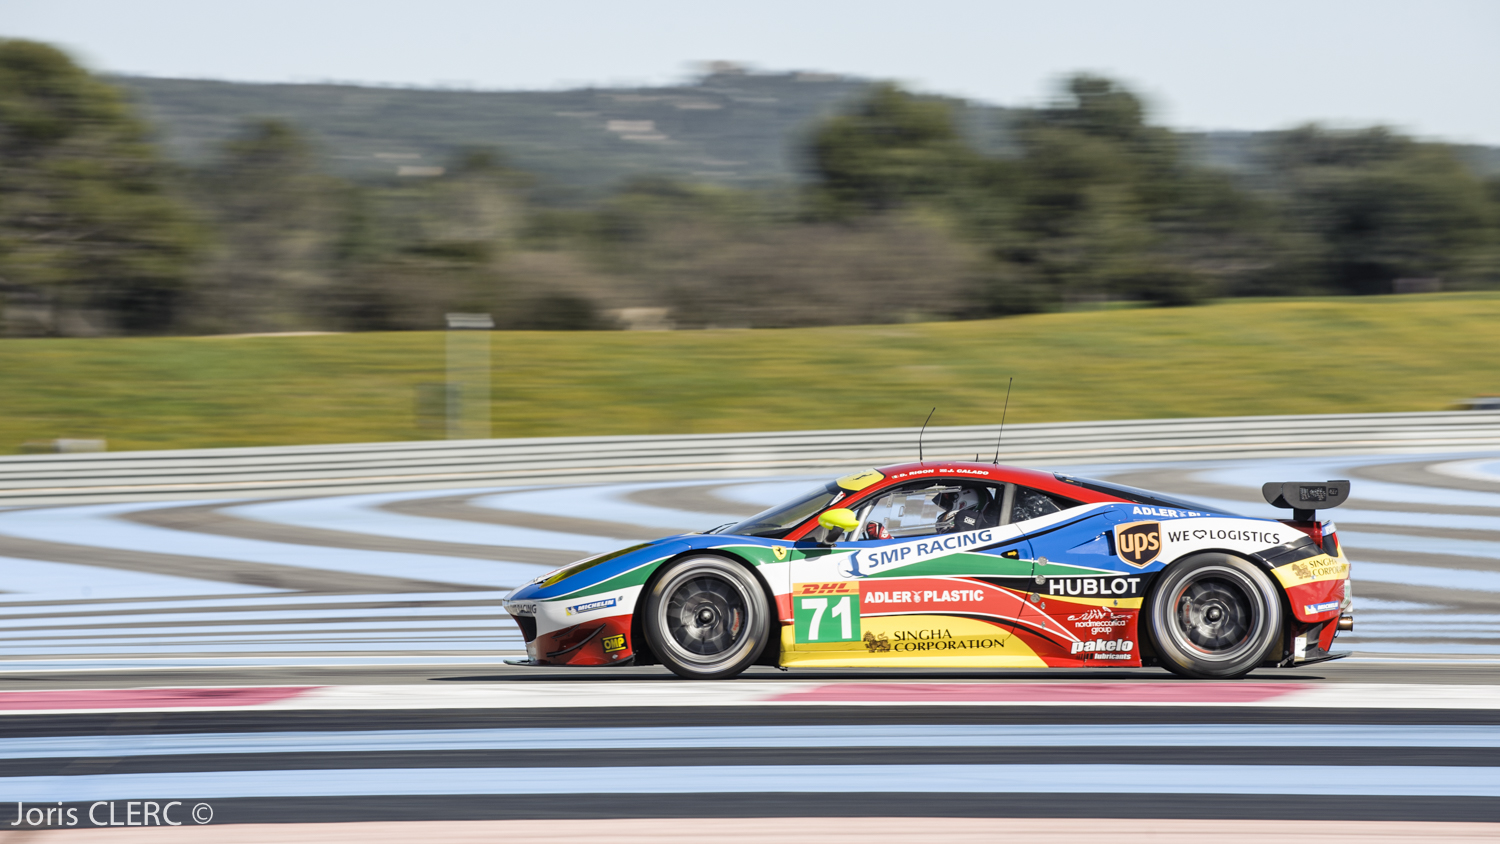 Prologue FIA WEC 2015 - Ferrari F458 GTE